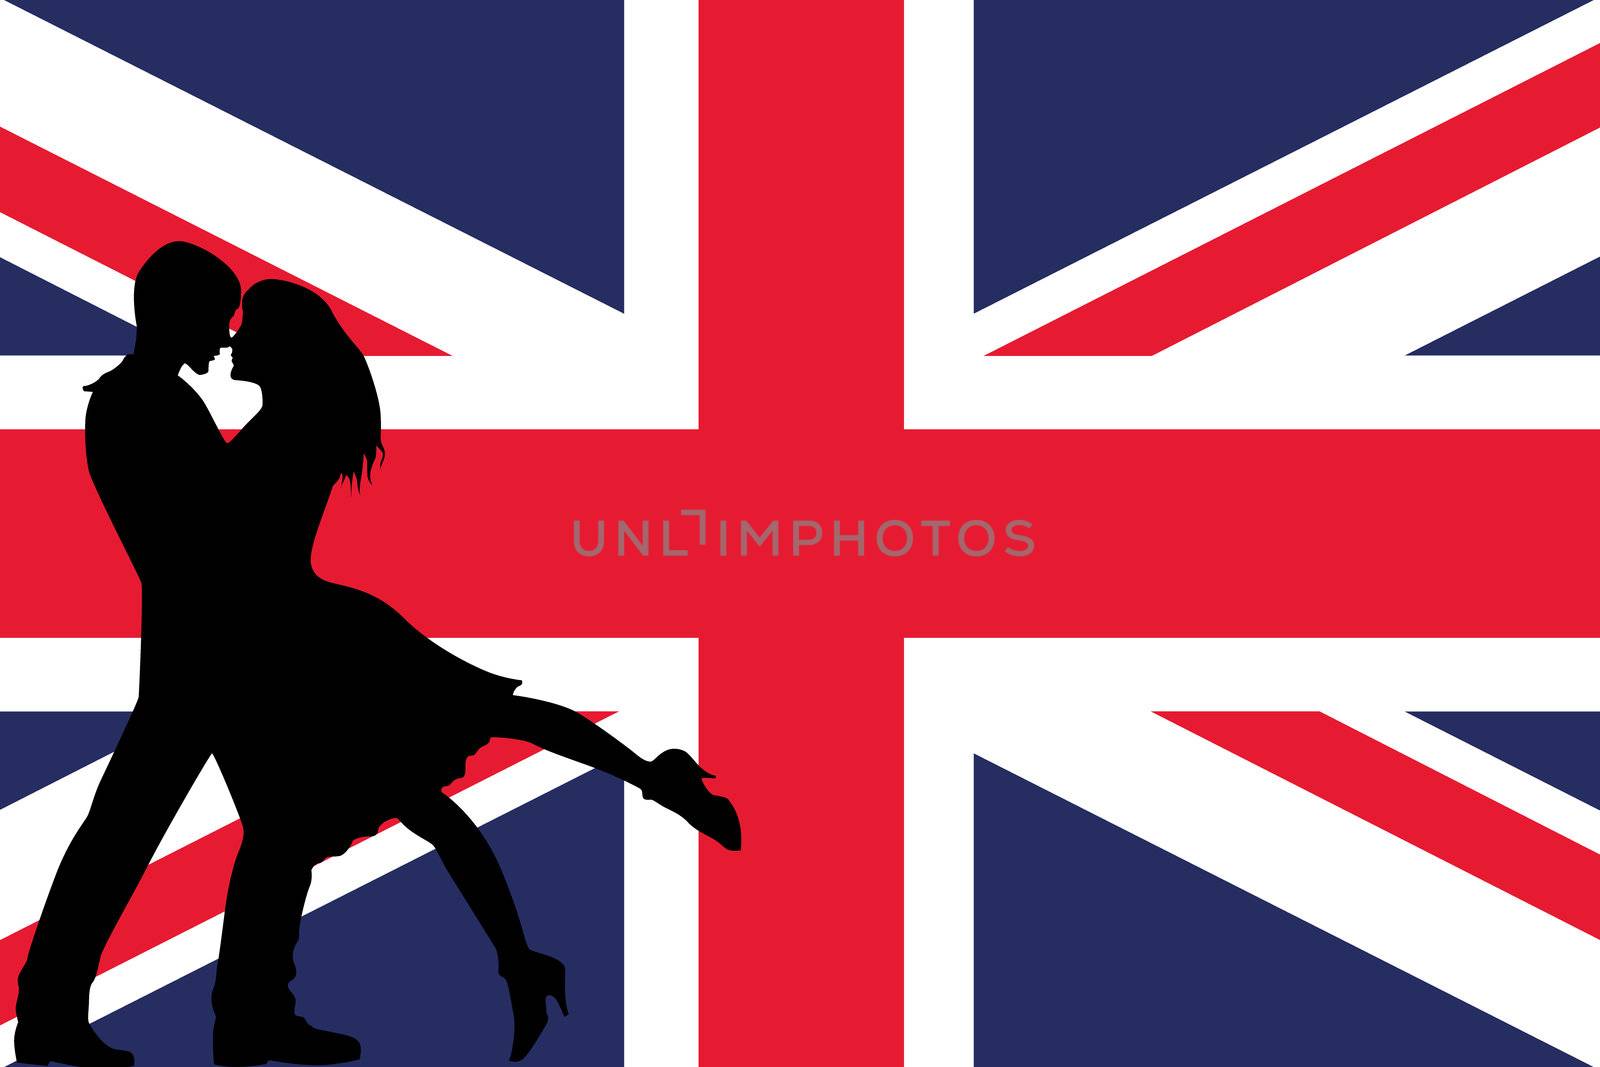 An Illustrated flag of the United Kingdom by DragonEyeMedia